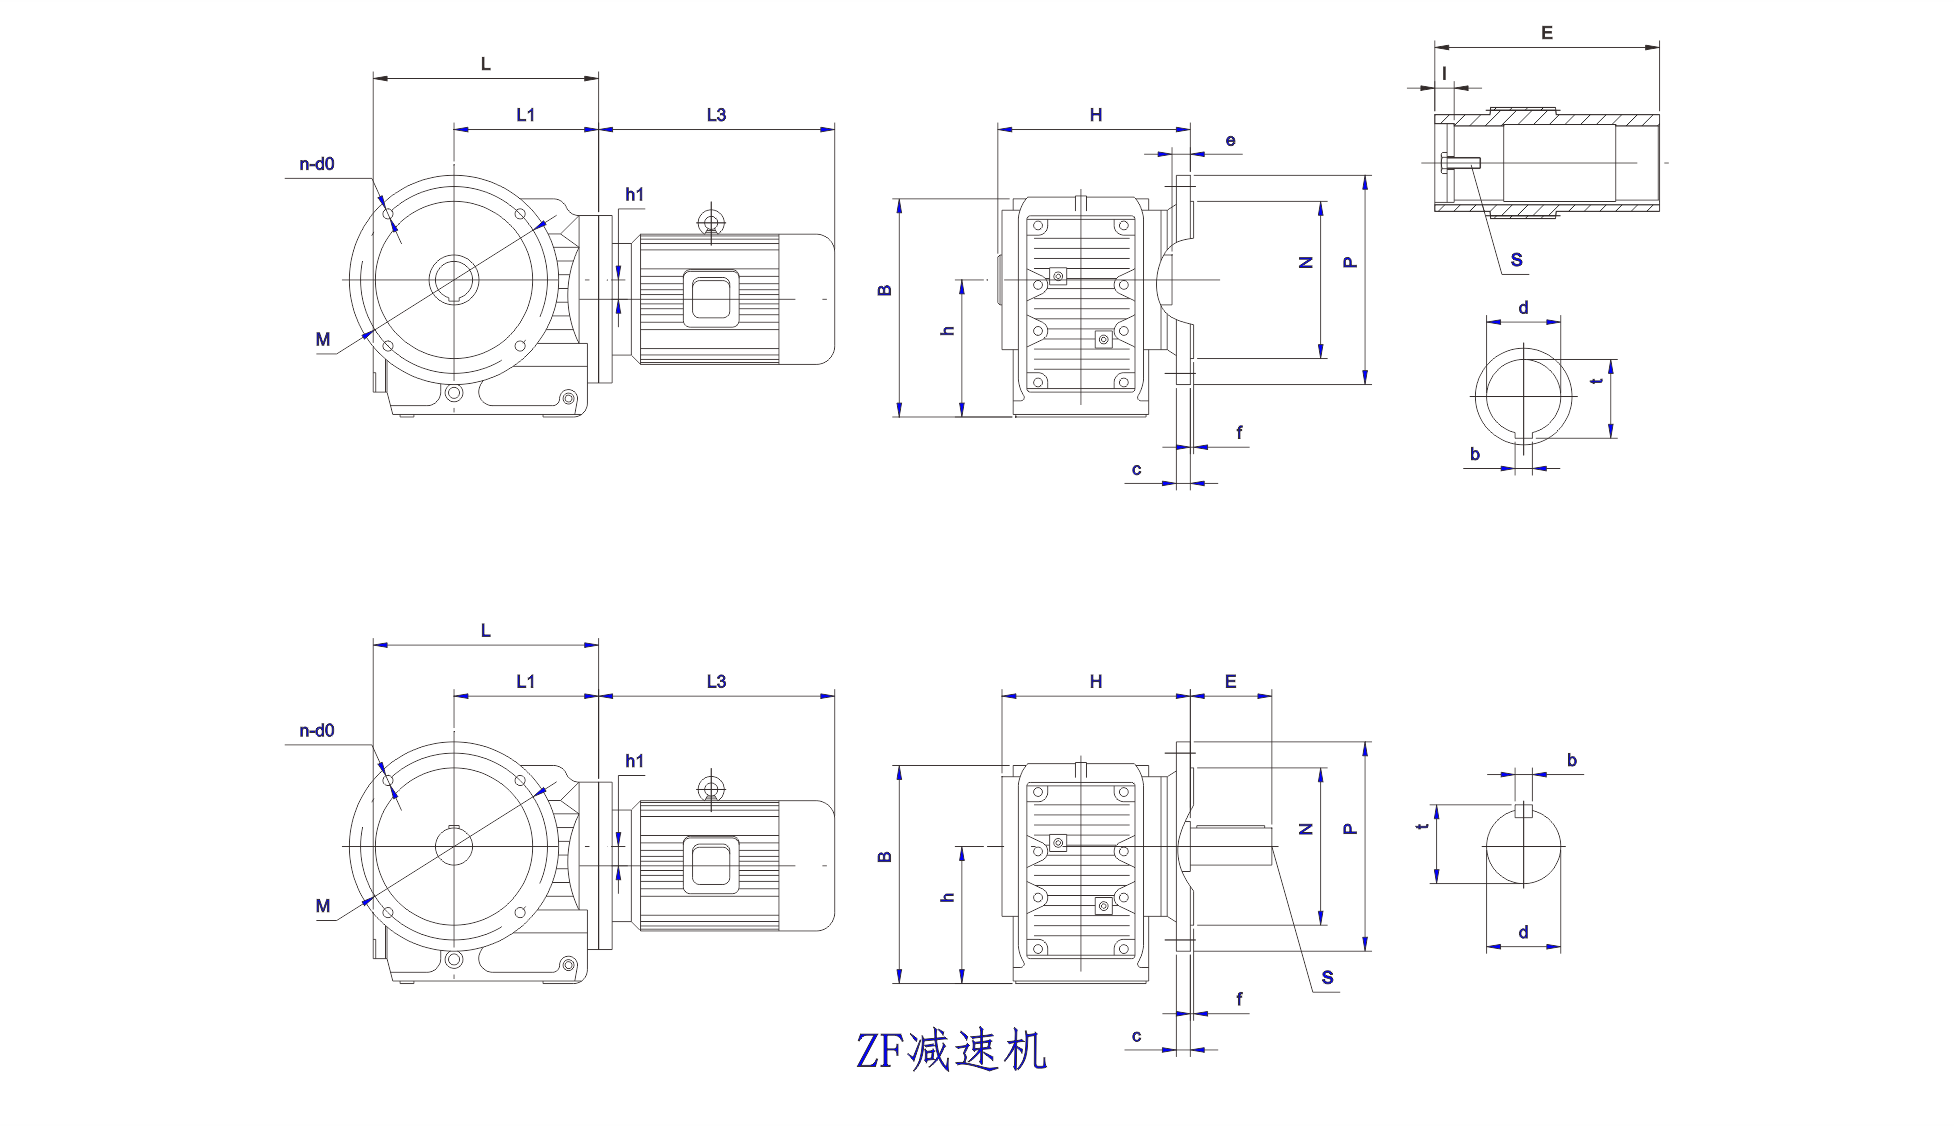   ZF系列正交軸齒輪減速機設計圖